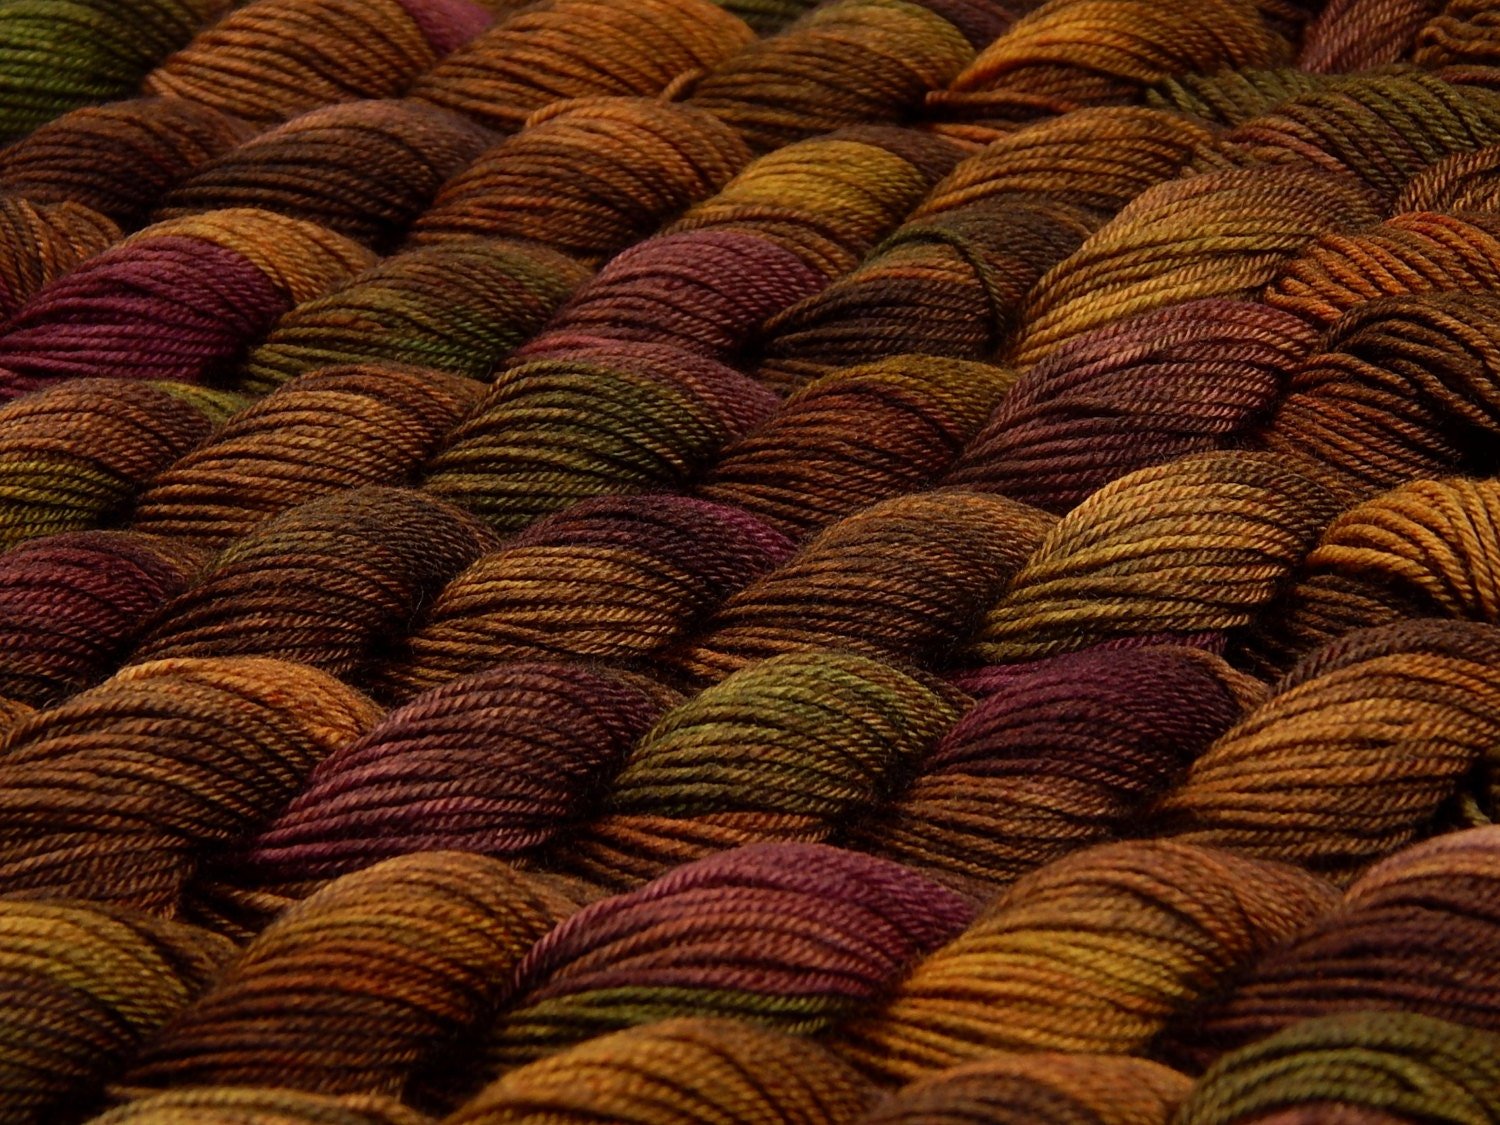 Sock Yarn Mini Skeins Hand Dyed Yarn, Fingering Weight 4 Ply Superwash Merino Wool - Clove Multi - Indie Knitting Yarn, Brown Autumn Yarn